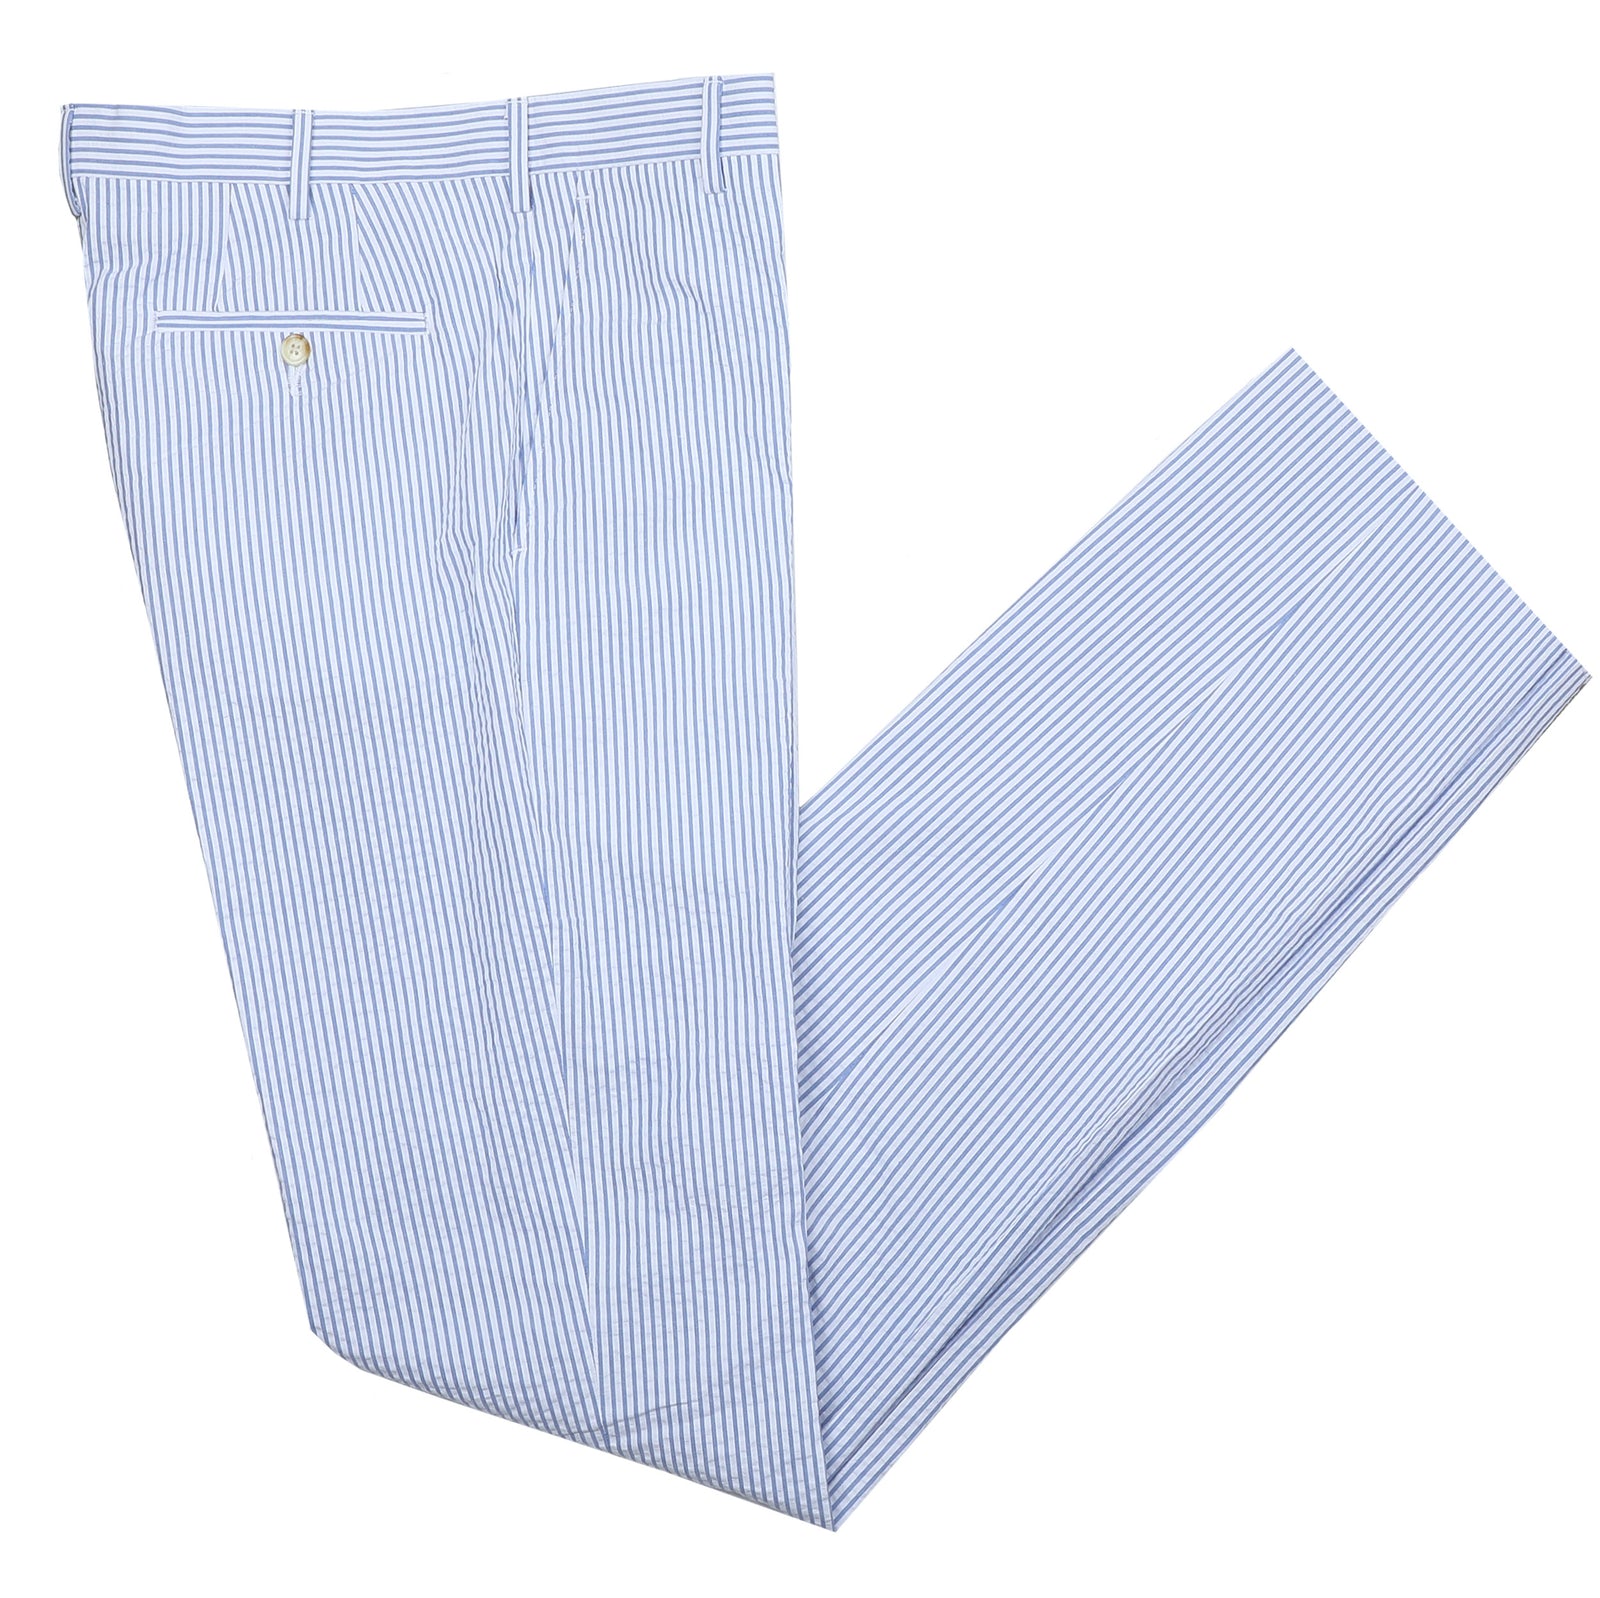 Mantova Ely Dark Blue Slim Fit Cotton Pants | Slim fit cotton pants, Black  pants outfit mens, Blue pants outfit